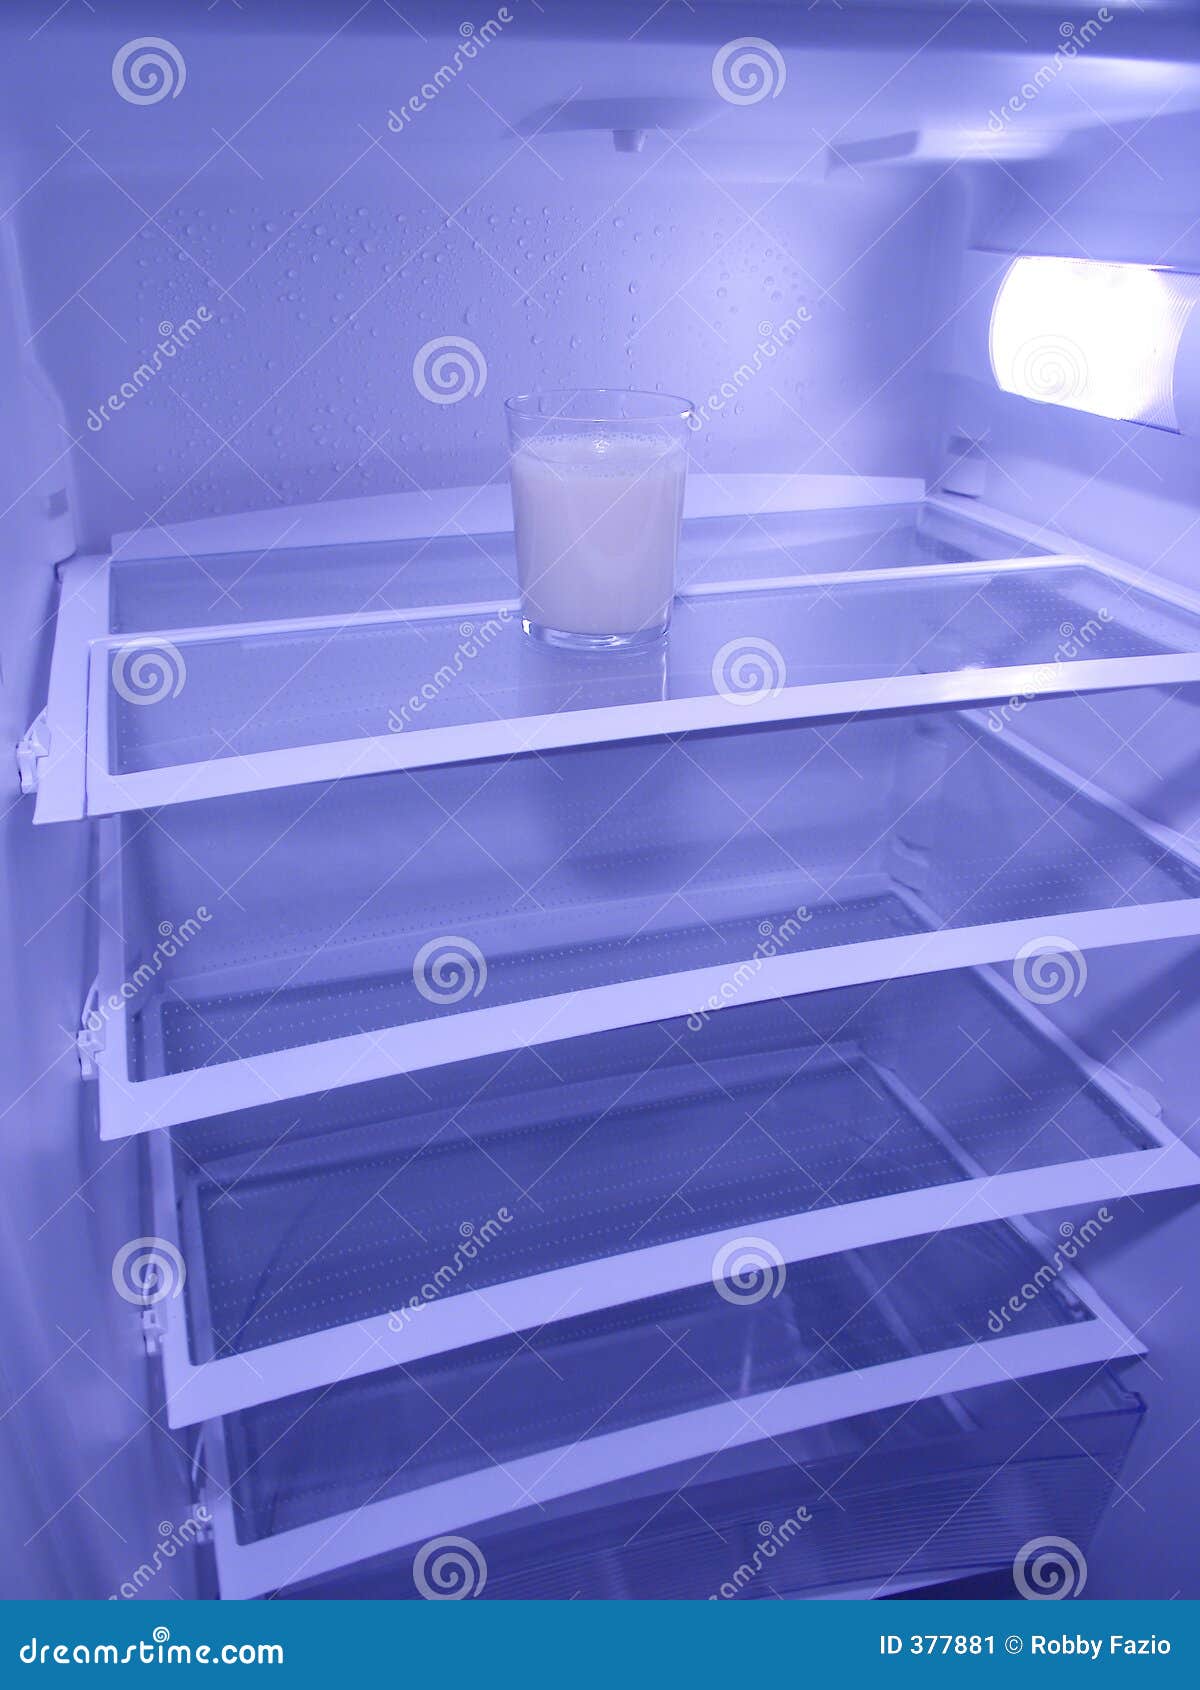 https://thumbs.dreamstime.com/z/glass-milk-empty-refrigerator-377881.jpg